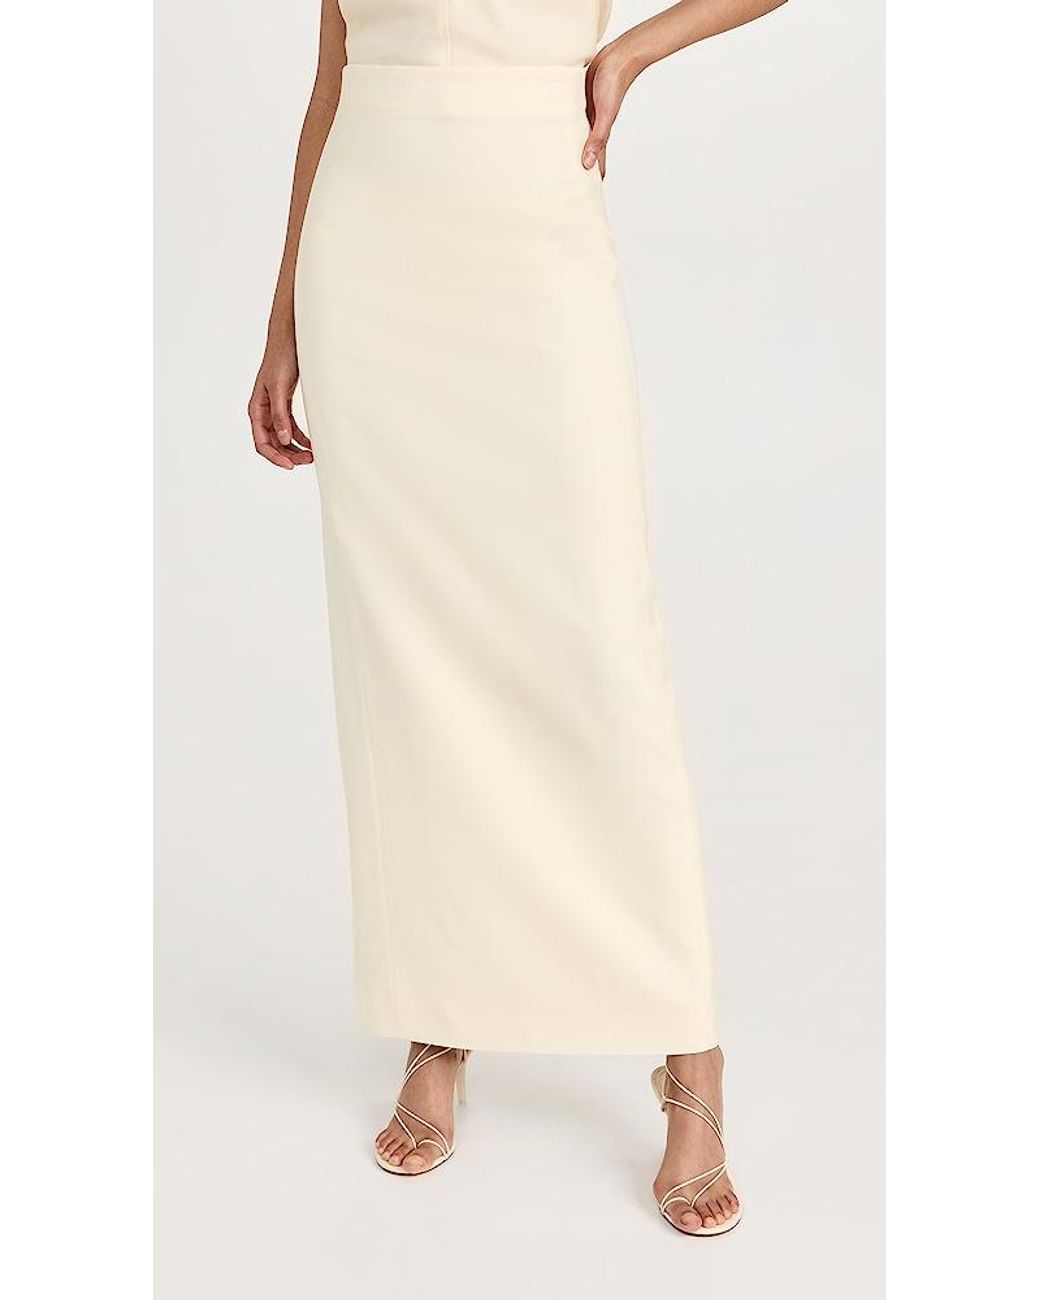 Wardrobe NYC Column Skirt in Natural | Lyst